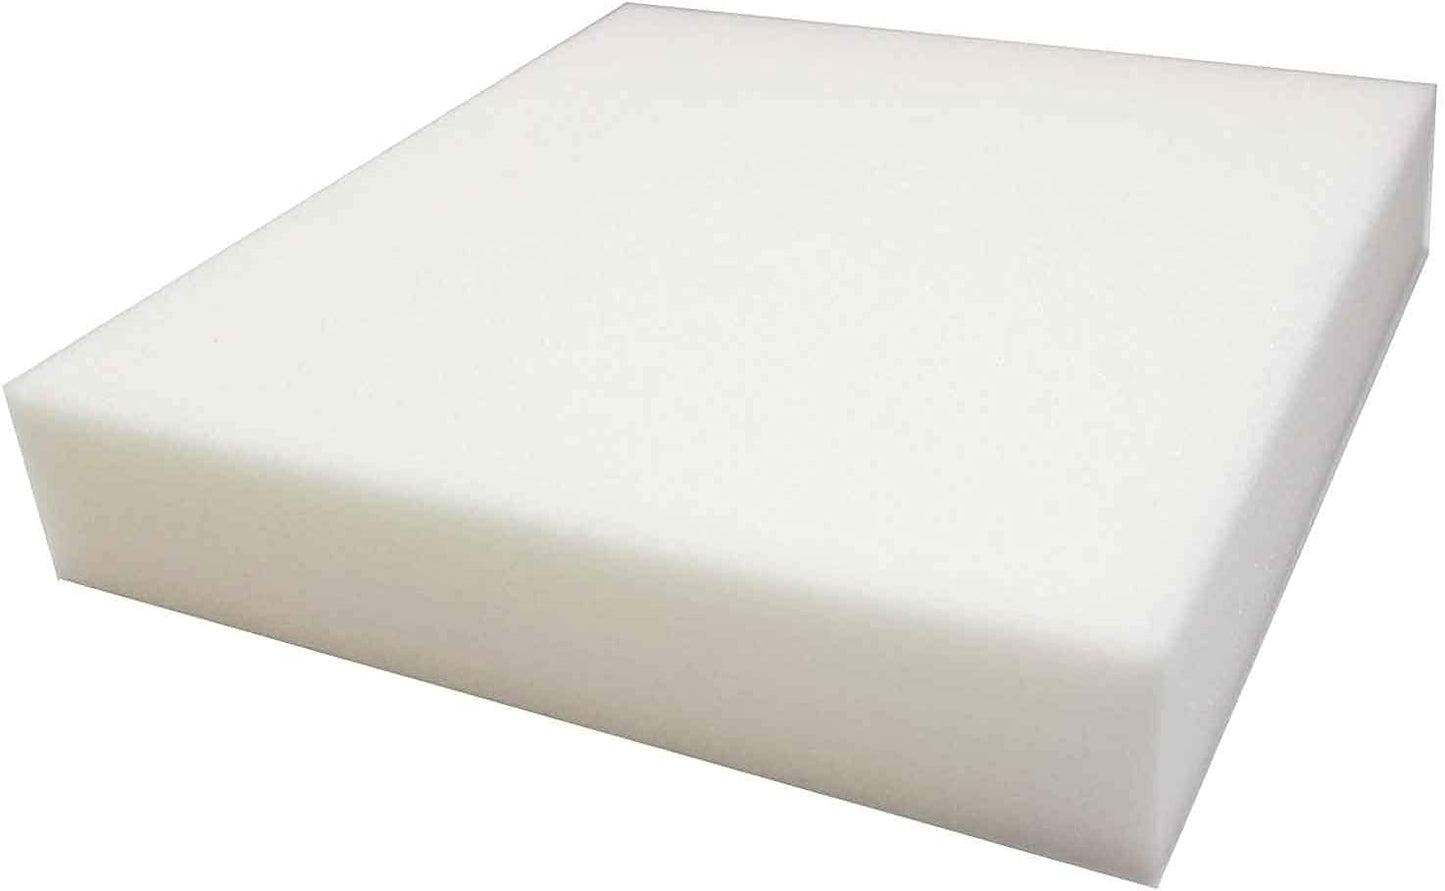 Large High-Density Needle Felting Foam Pad White12"x12"x2" (30x30cm)